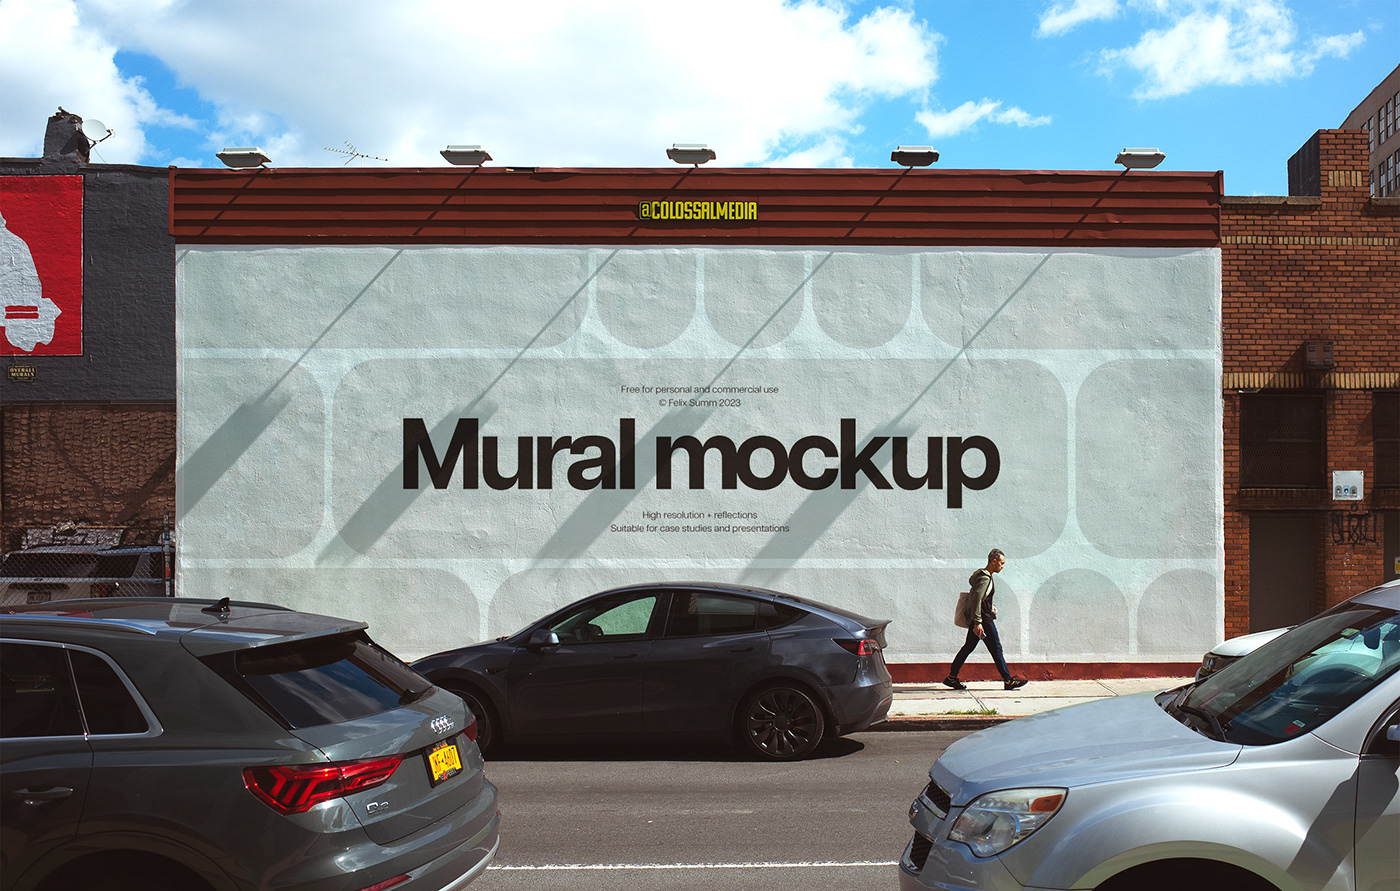 Mockup Mural free template freemockup presentation psd download free psd freebie